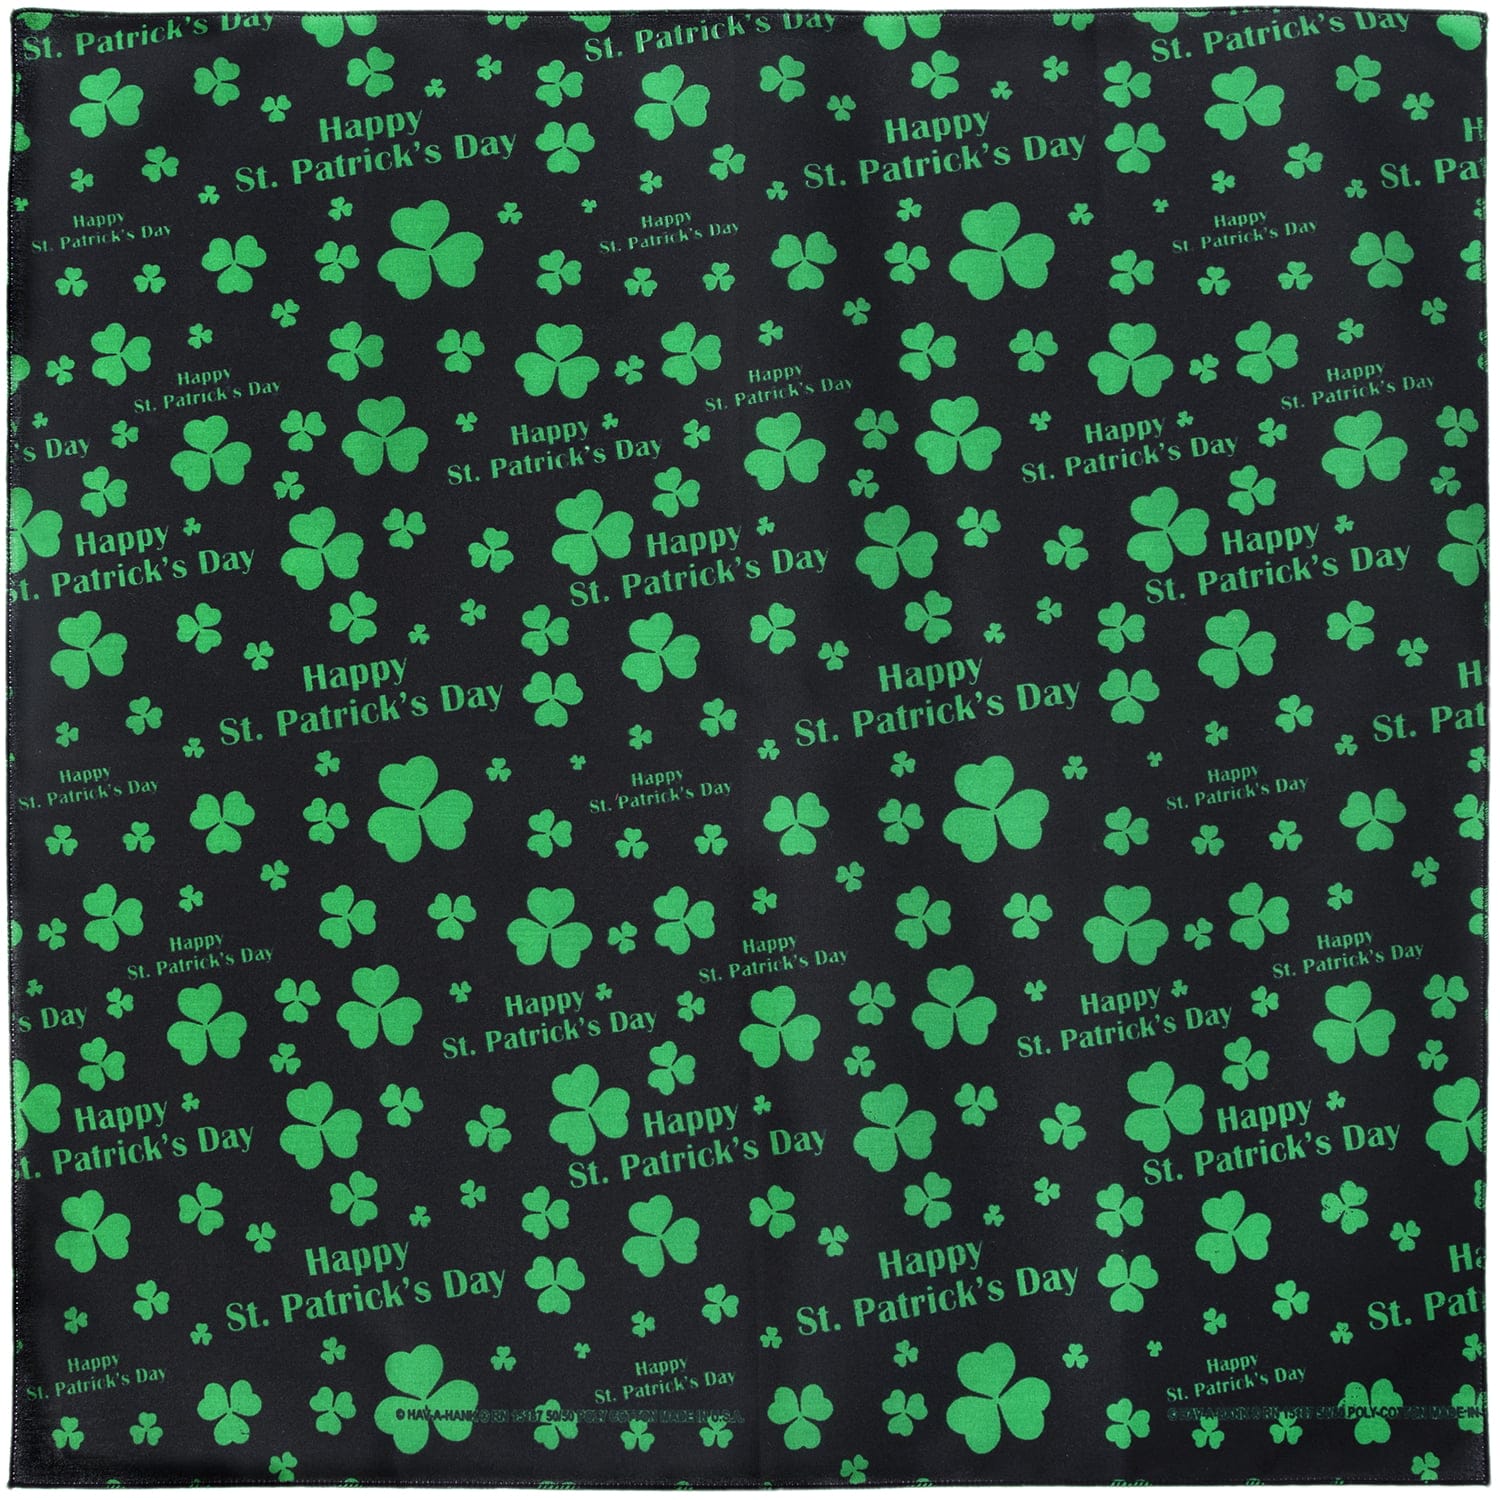 Happy St. Patrick's Day - Black Bandana - Dozen Packed - 22x22 Inch